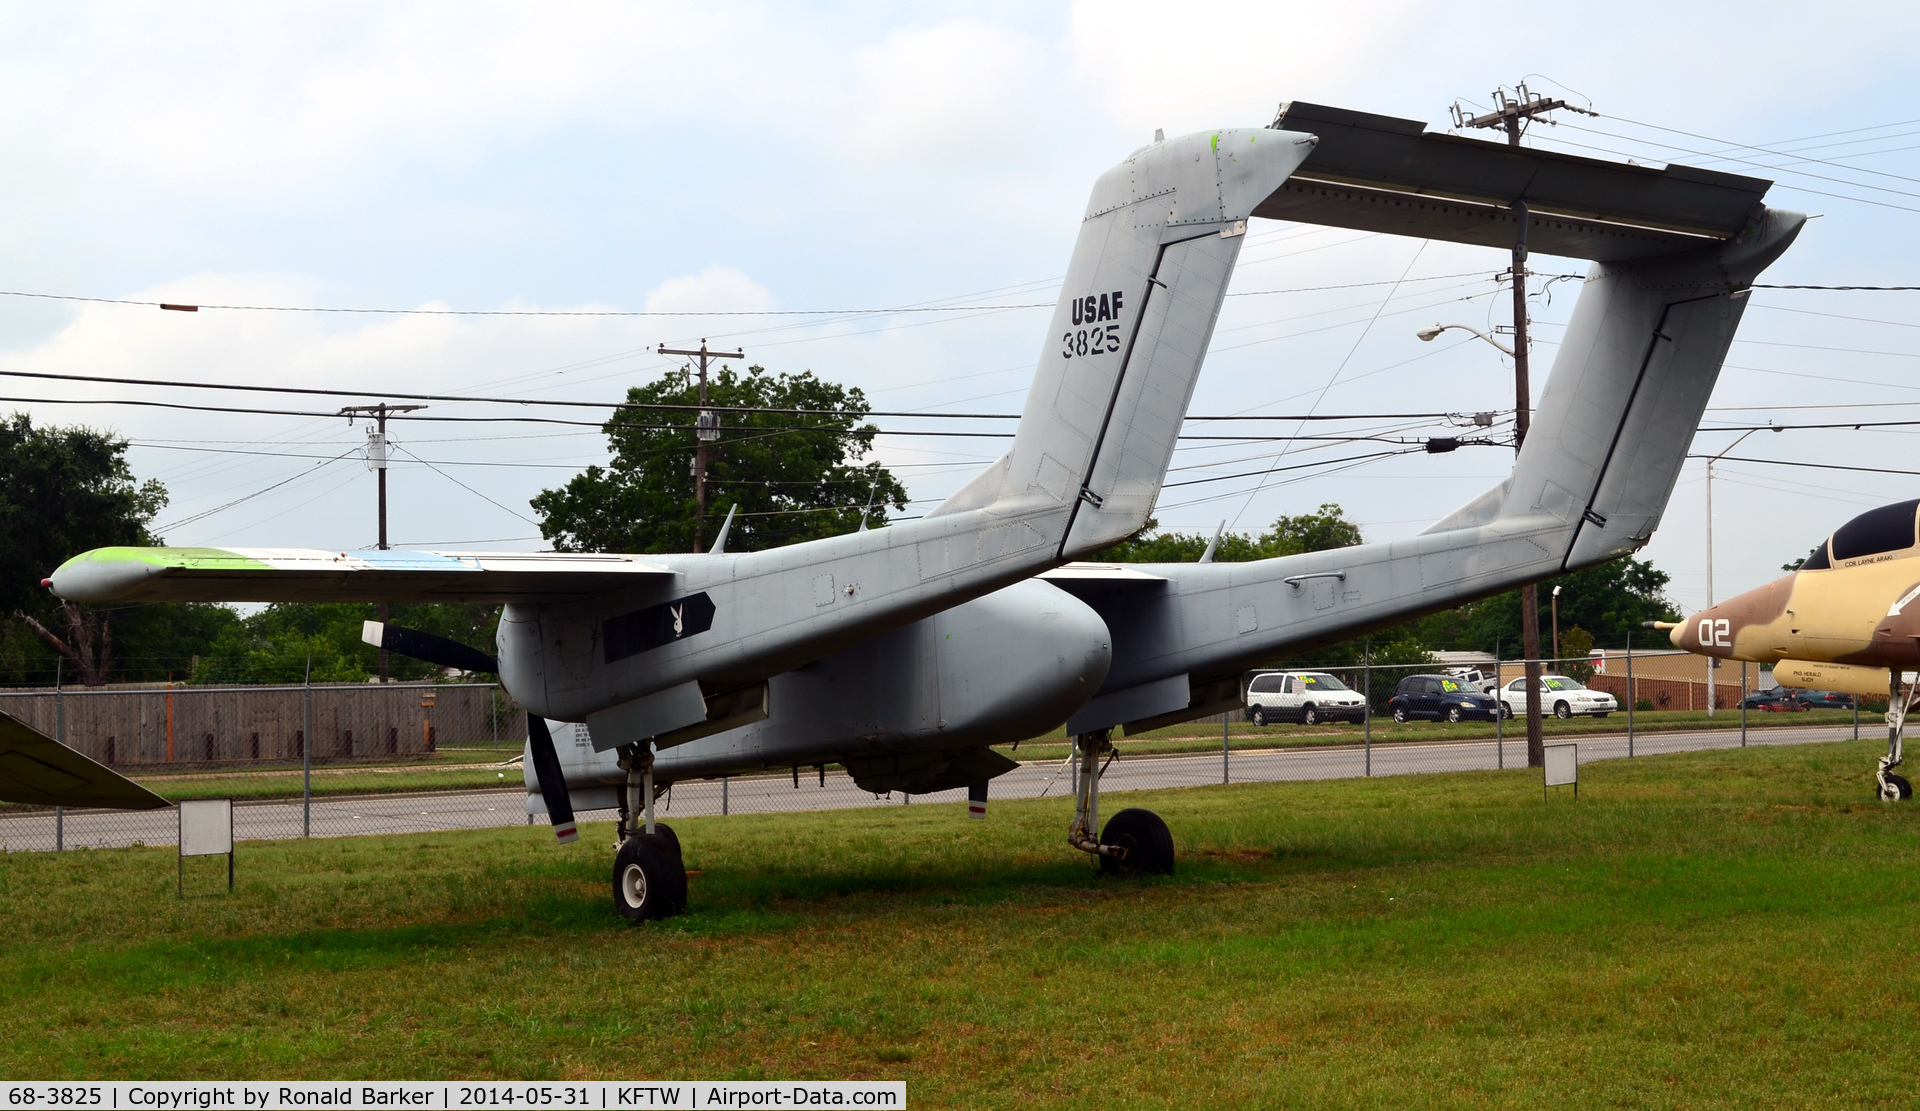 68-3825, 1968 North American Rockwell OV-10A Bronco C/N 321-151, Fort Worth Aviation Museum